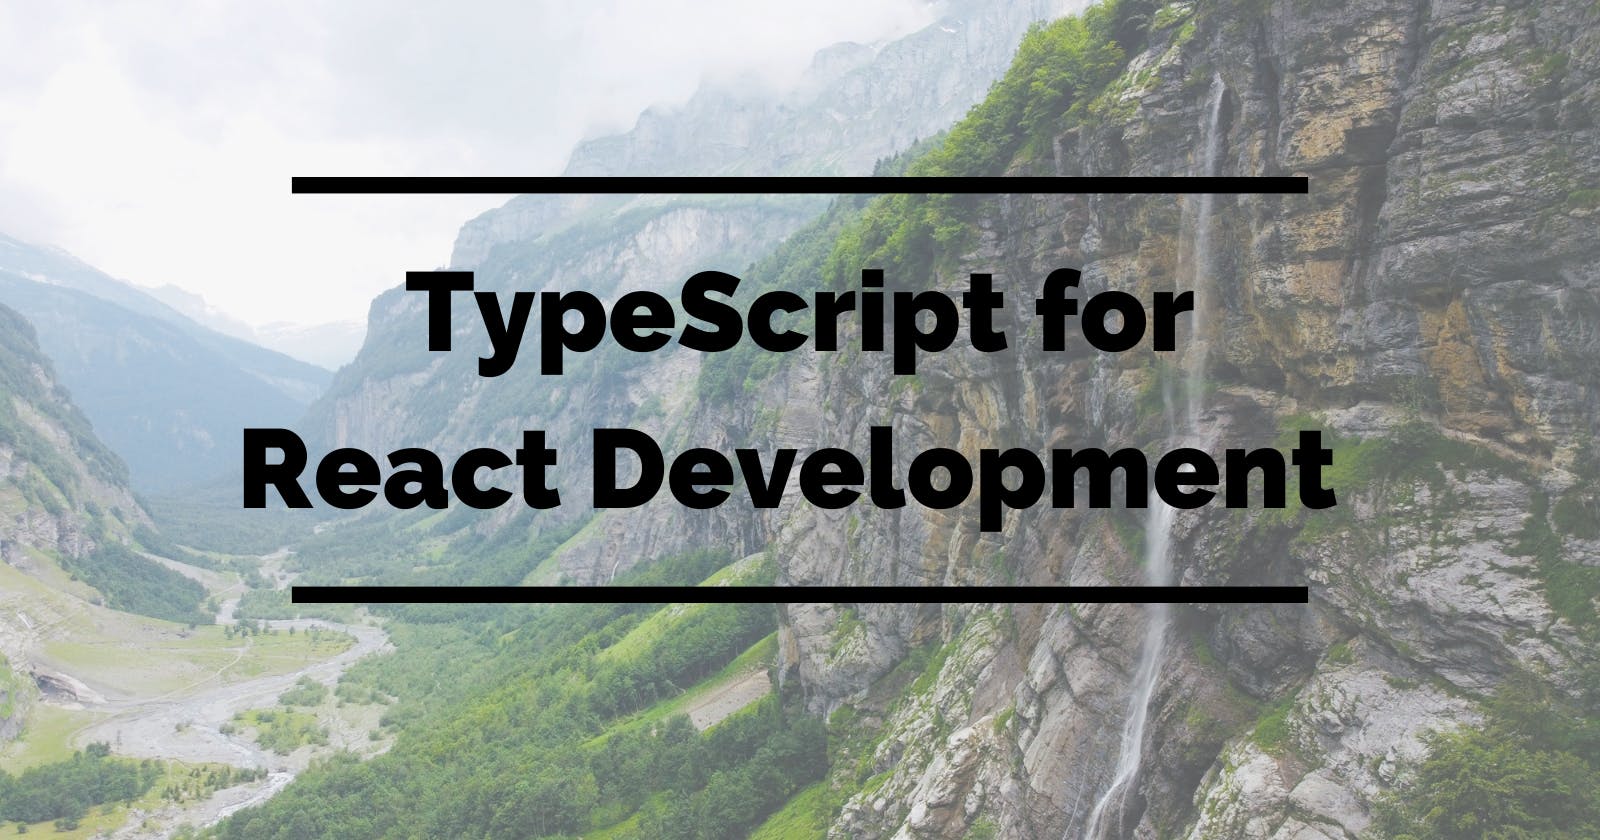 TypeScript for React Development